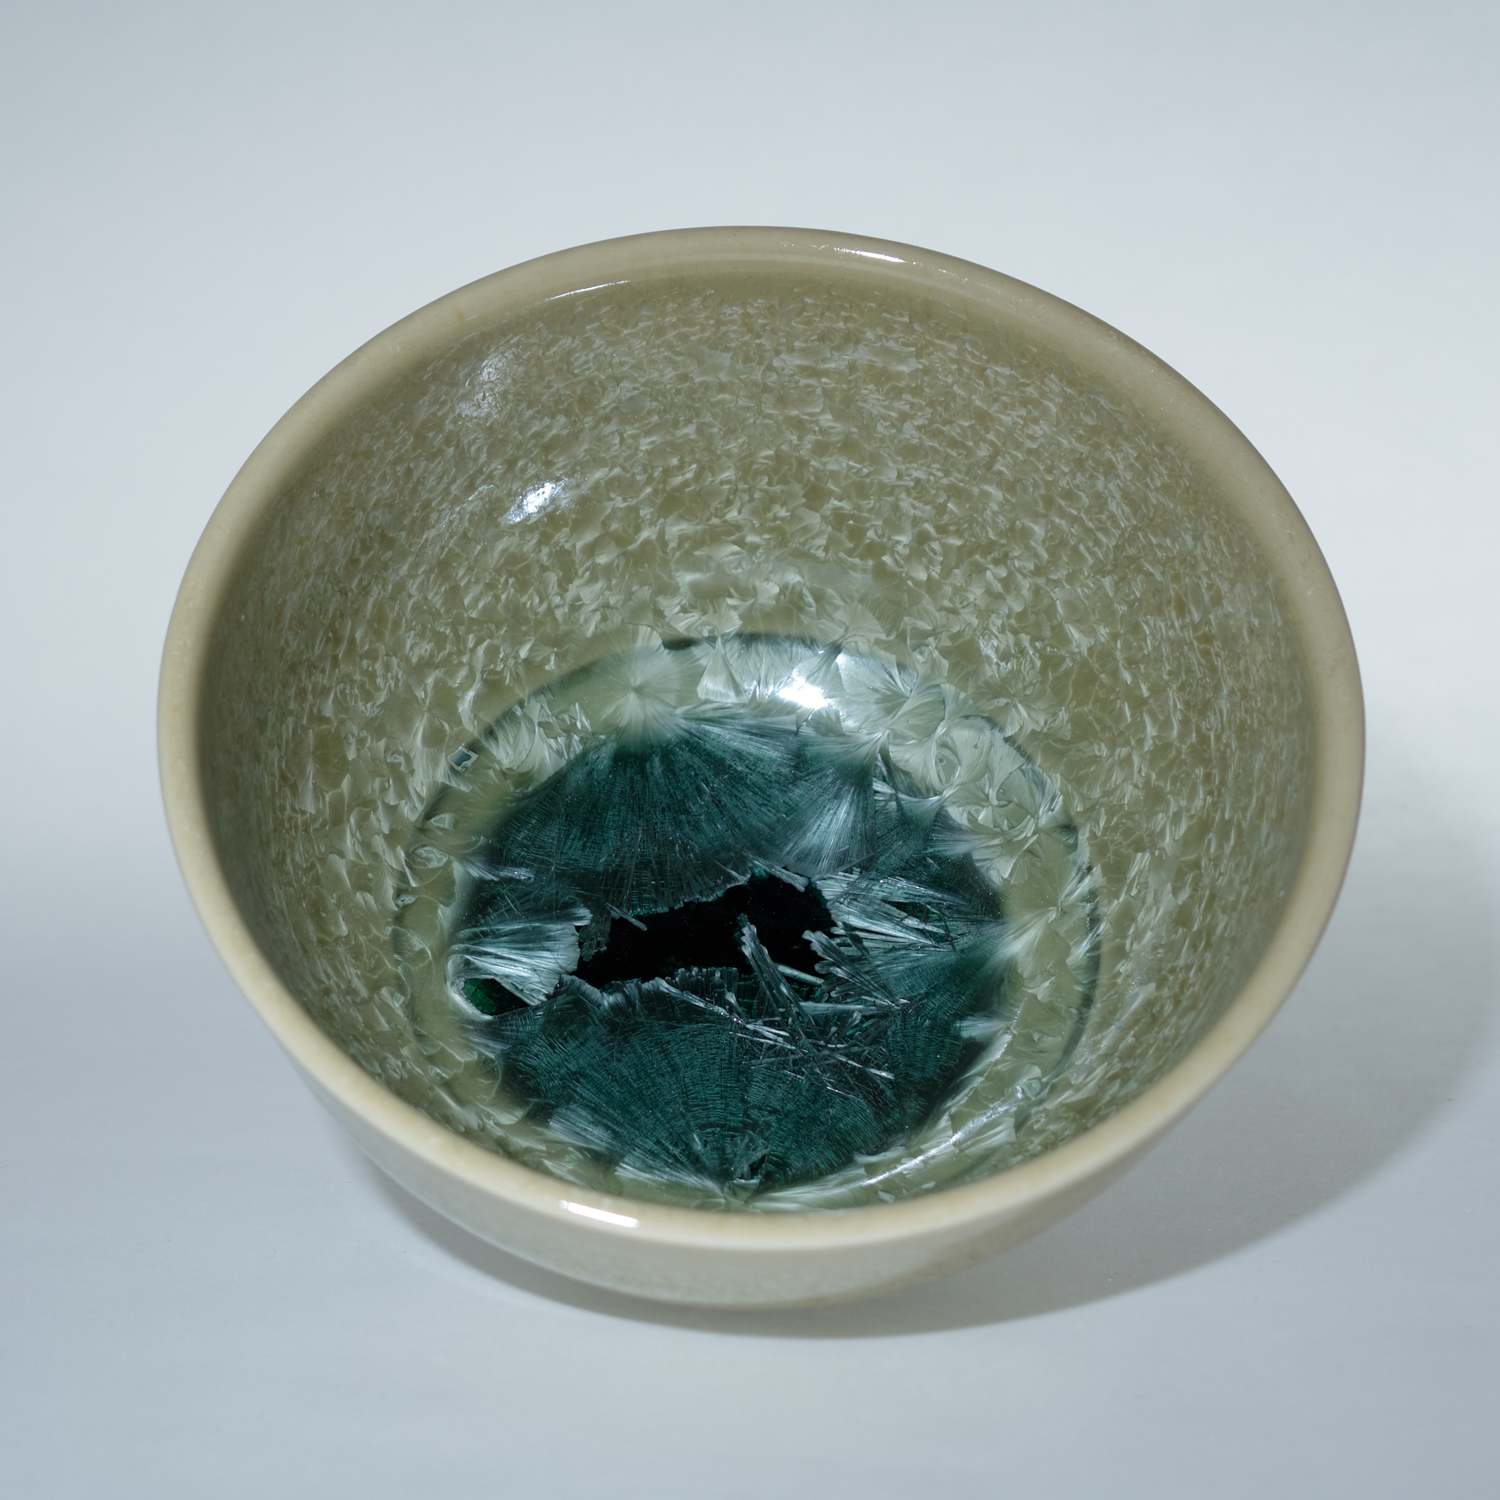 Yumiko Katsuya: Gold-Green Bowl Product Image 1 of 1